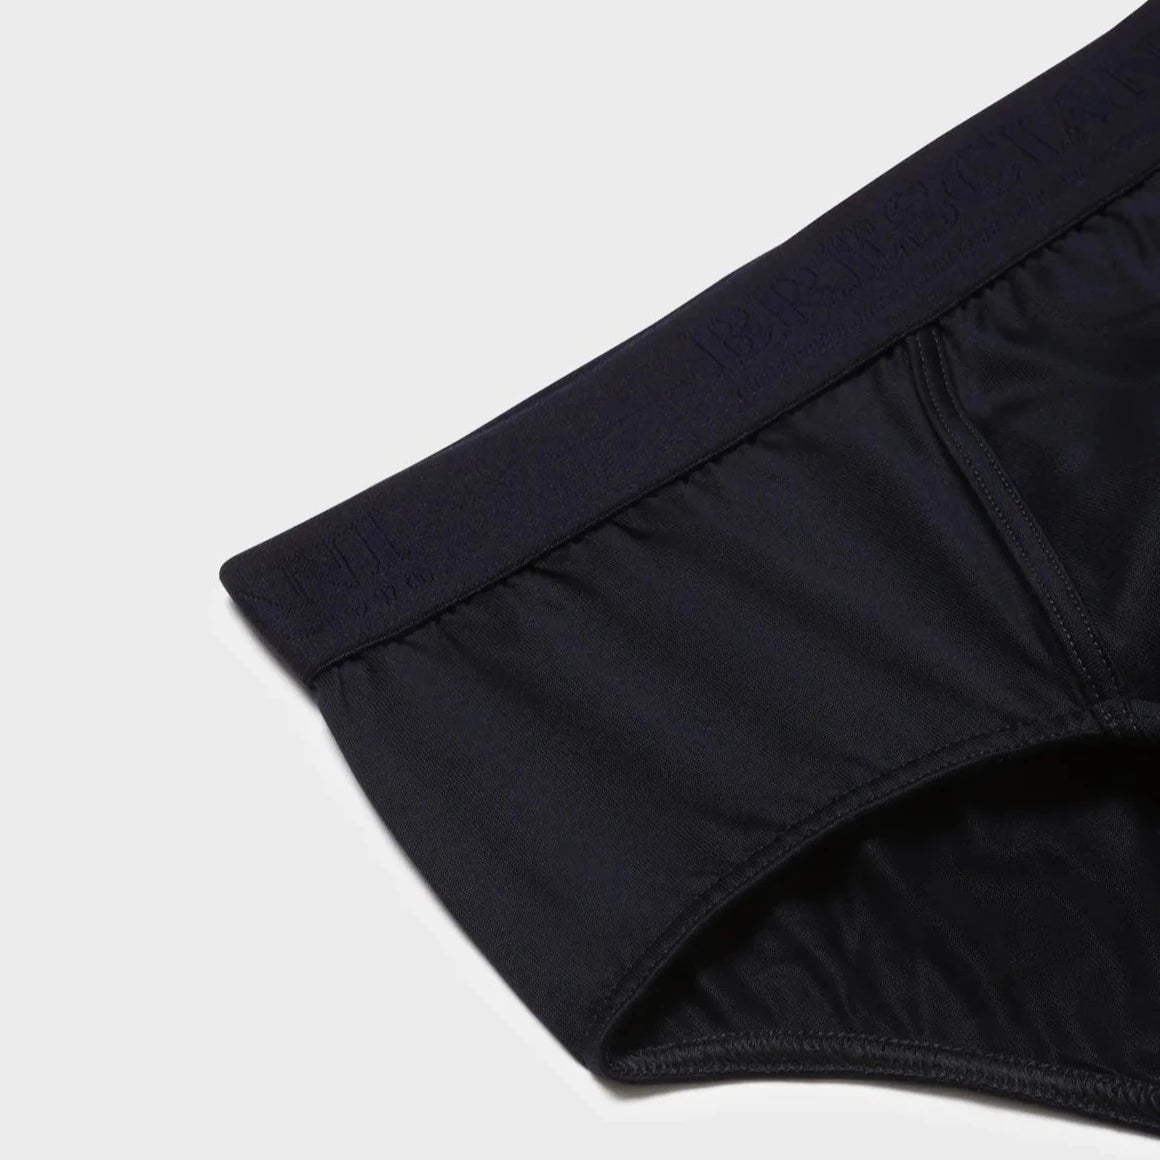 Men's Long Underwear 100% Cotton Underwear at International Jock